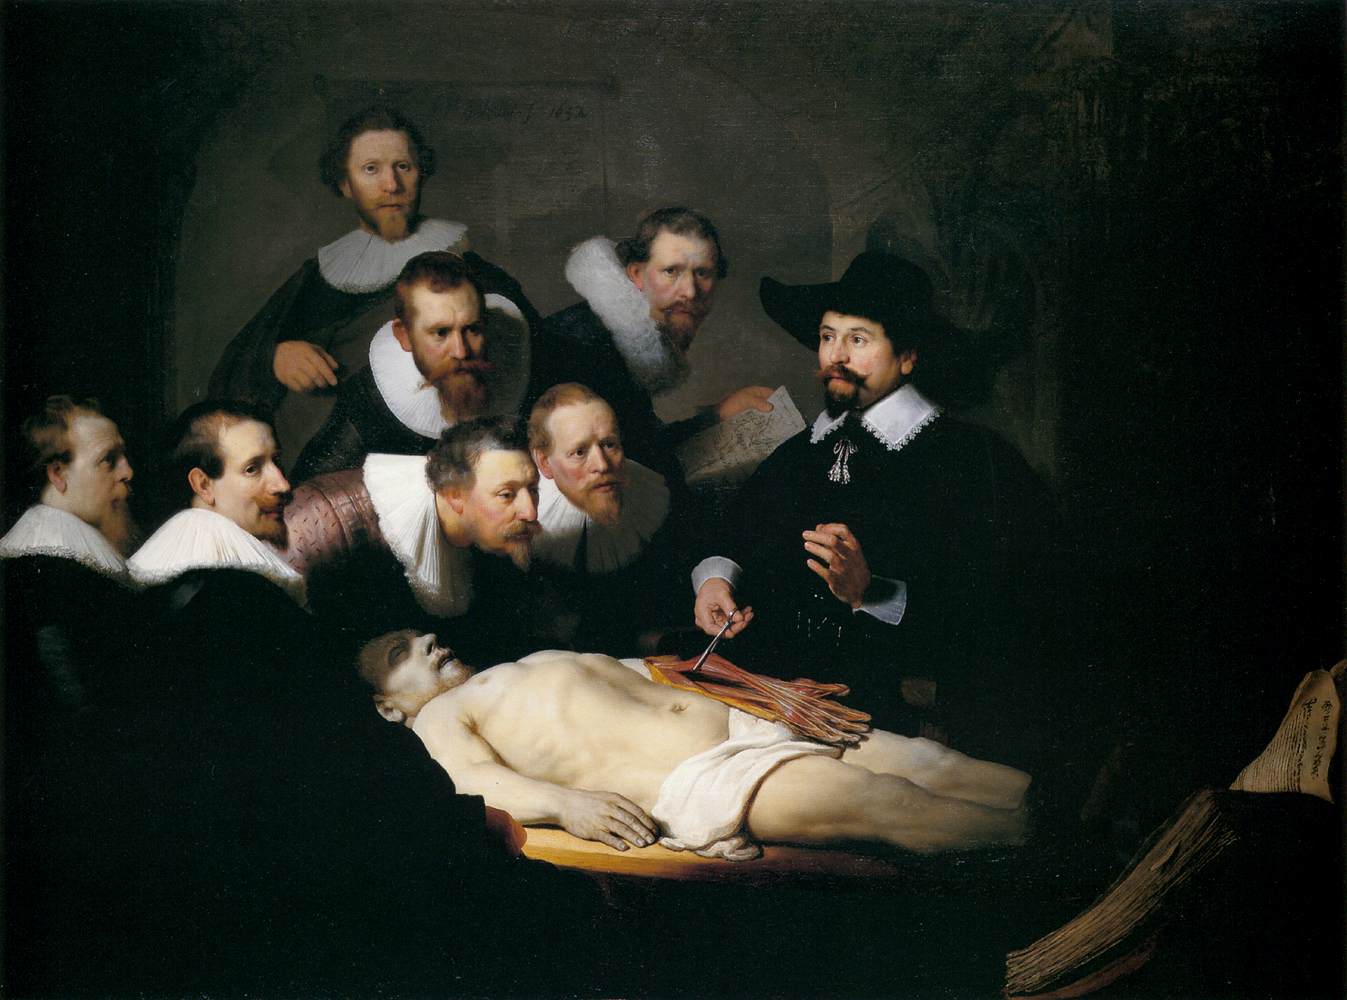 Anatomical investigation